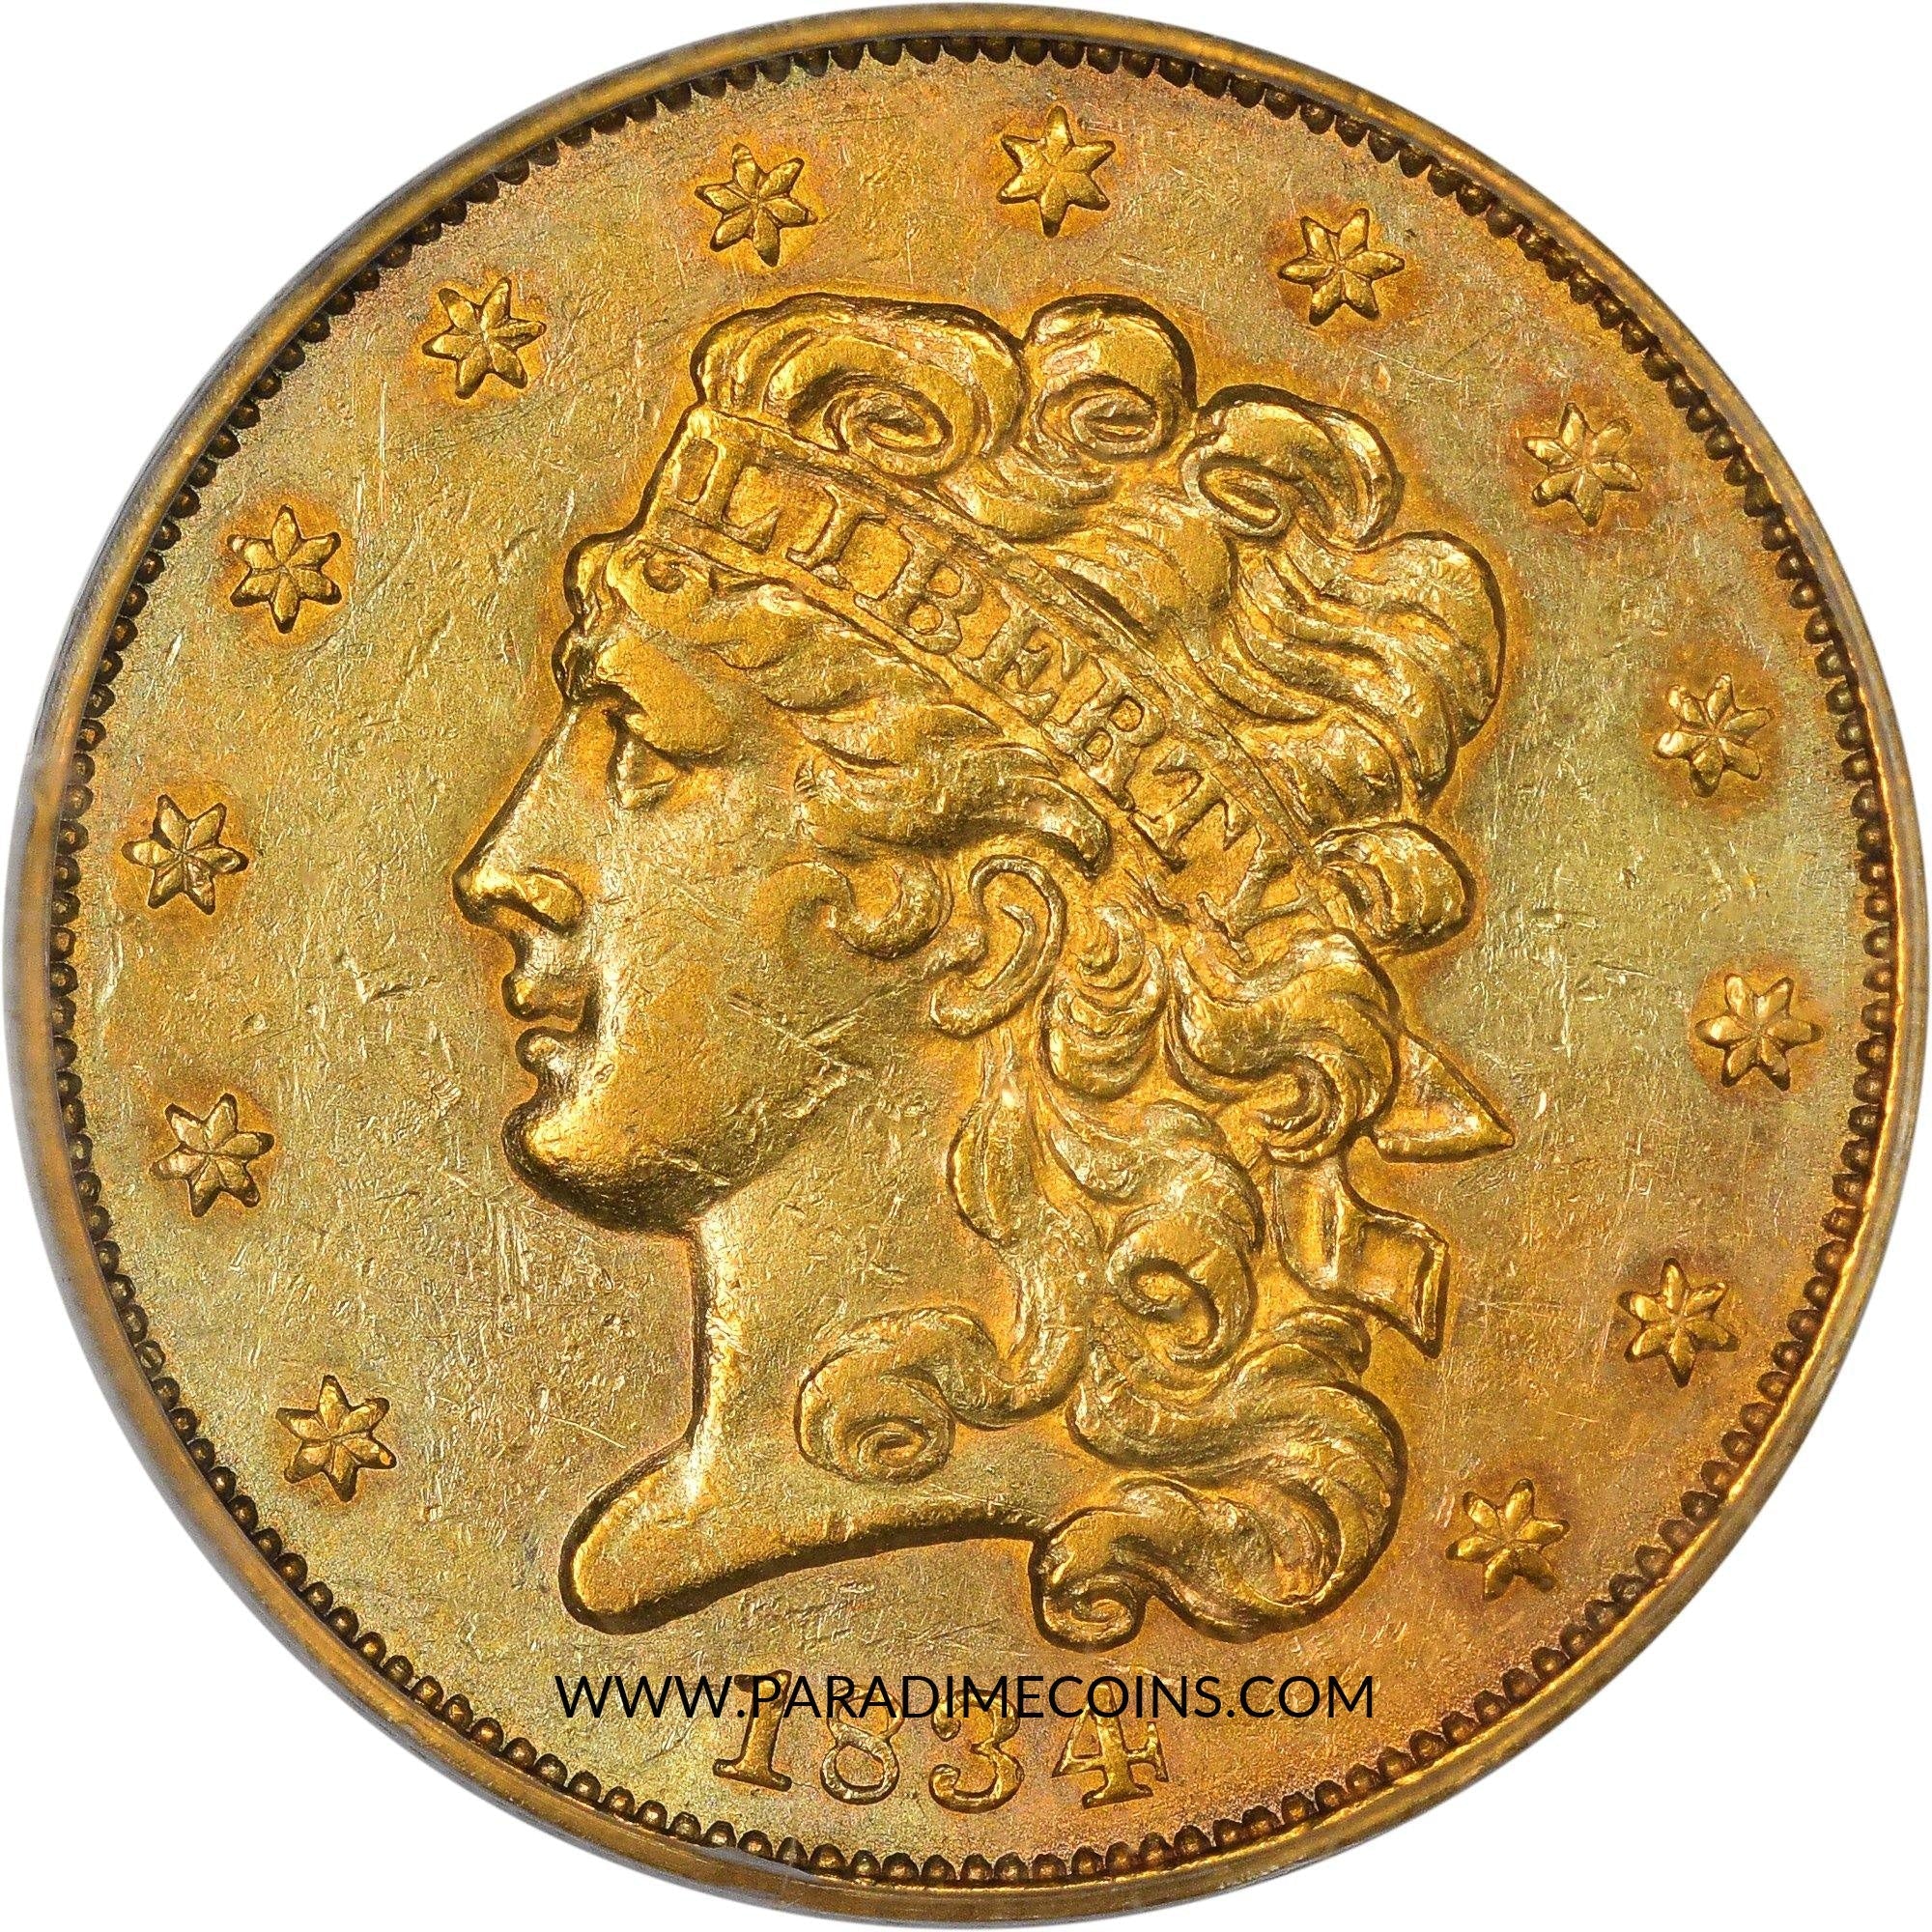 1834 $5 Classic Crosslet 4 AU53 PCGS - Paradime Coins | PCGS NGC CACG CAC Rare US Numismatic Coins For Sale